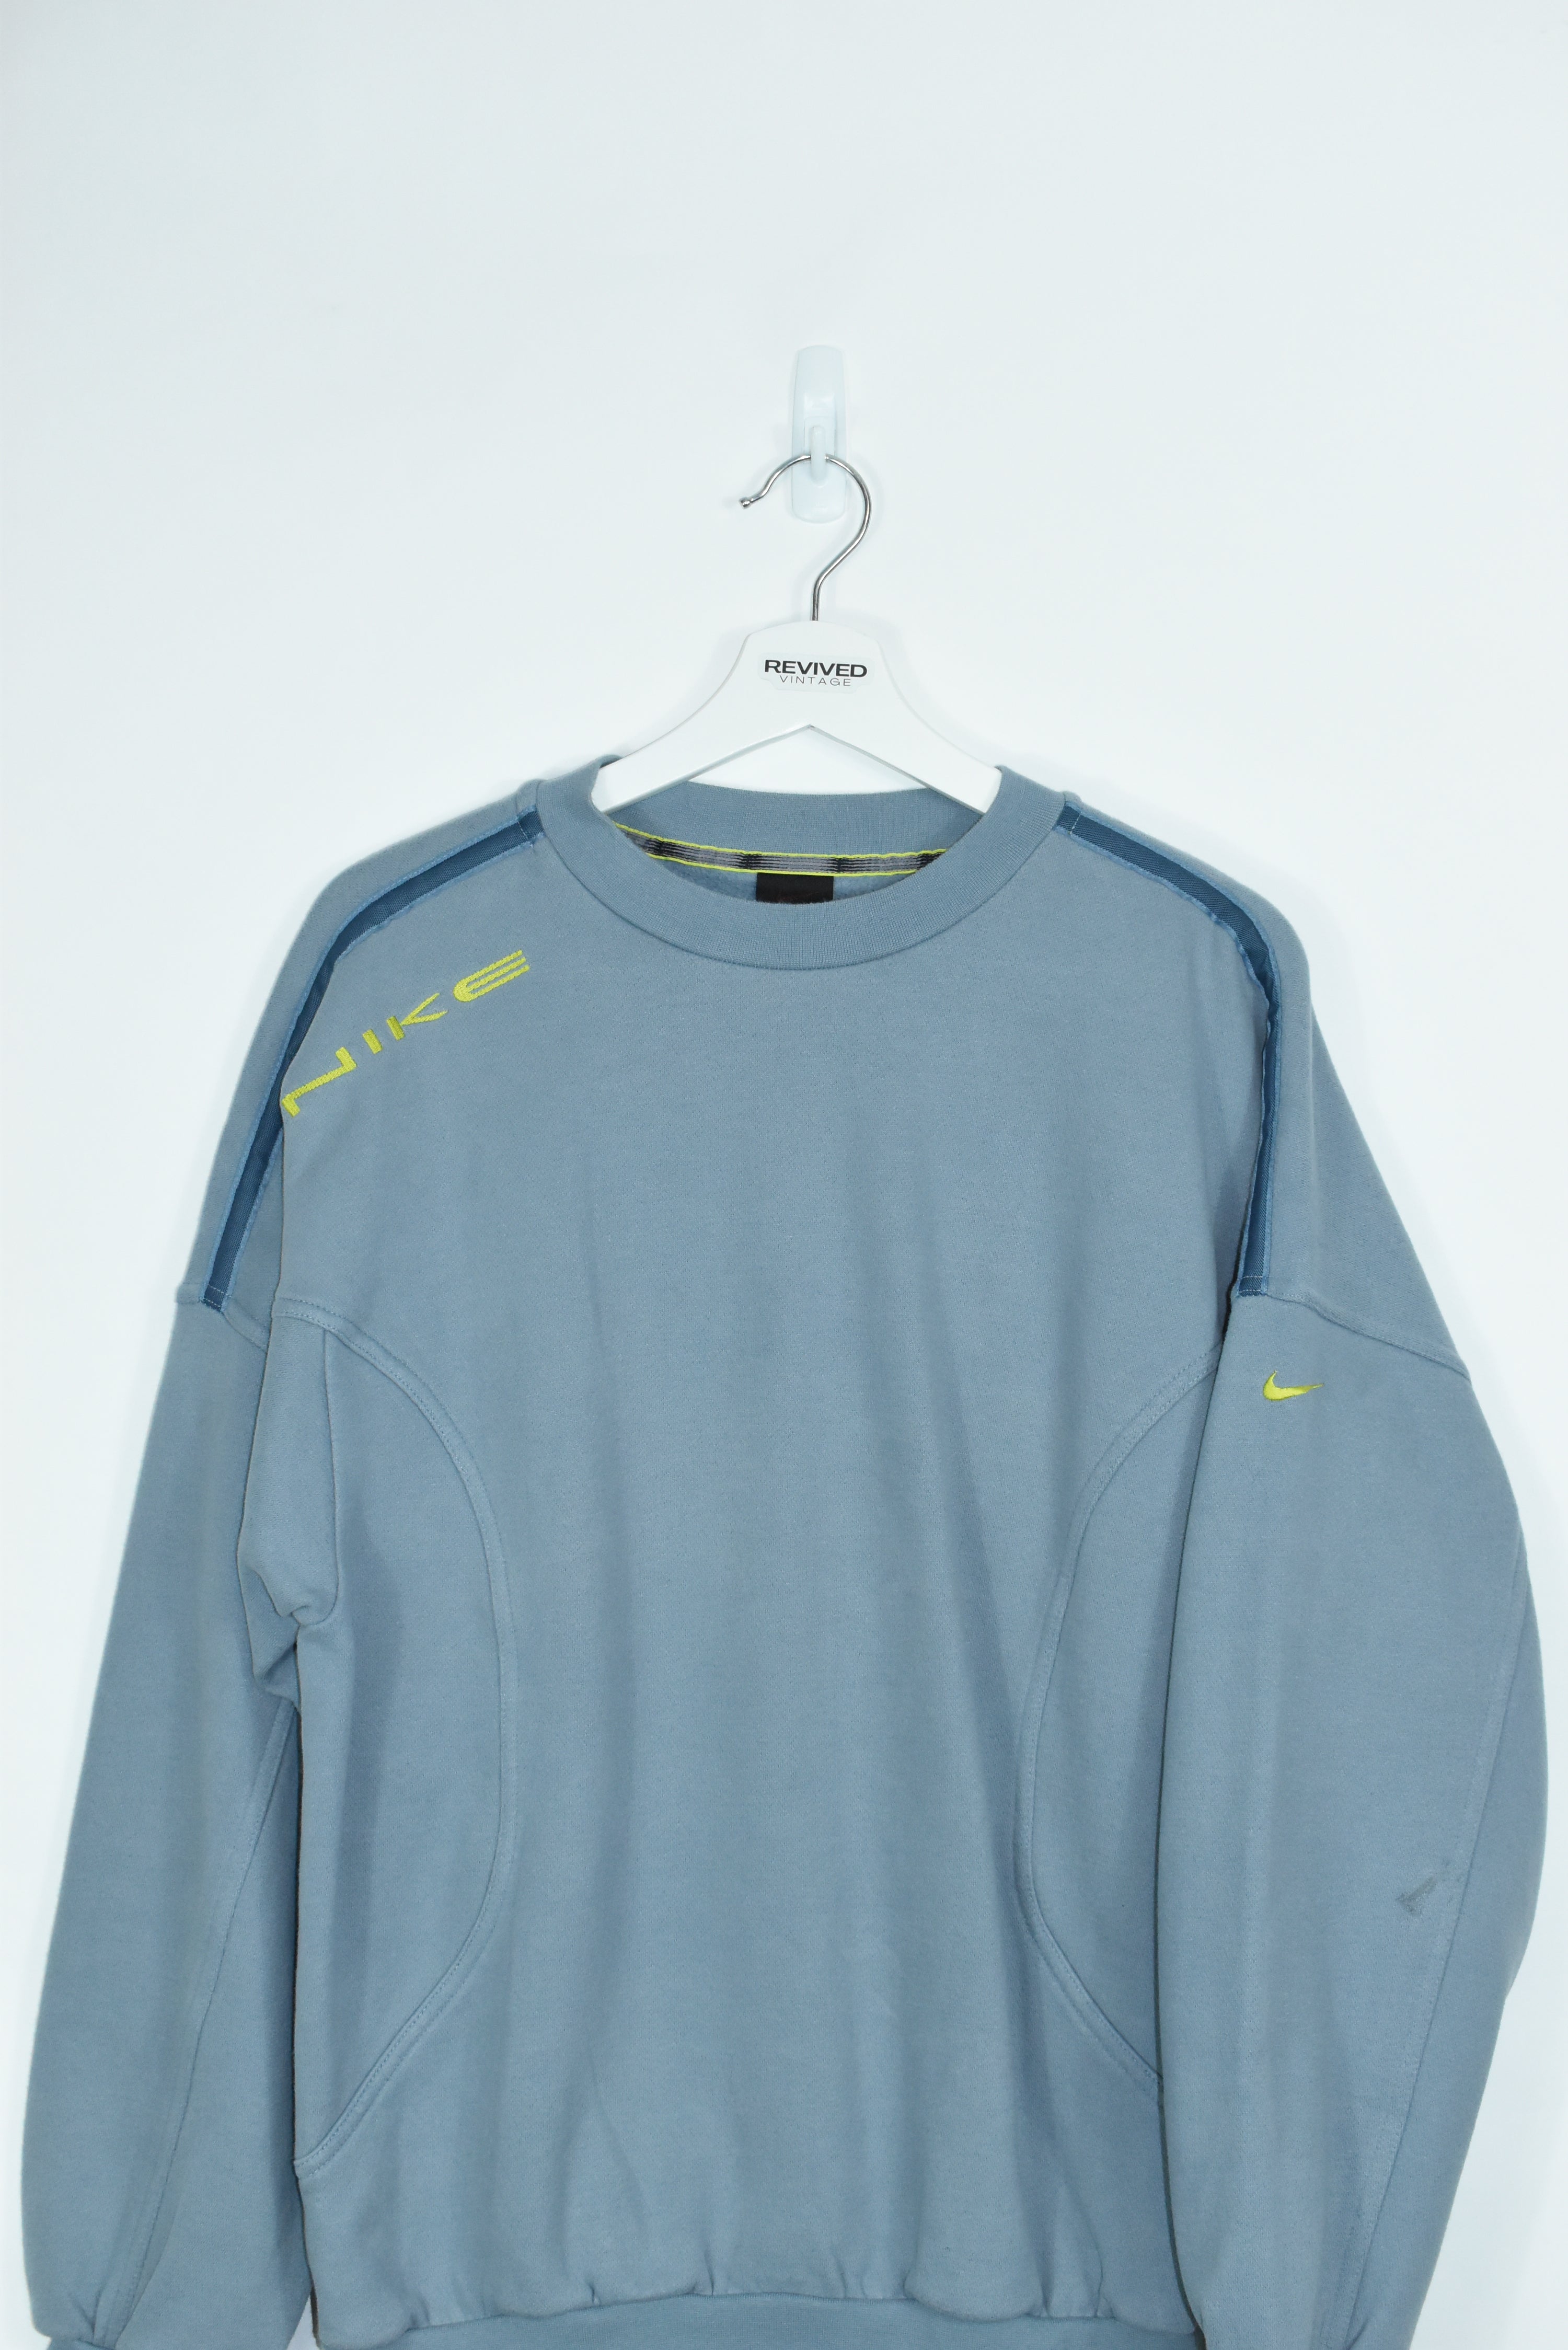 Vintage Nike Baby Blue Embroidery Sweatshirt Medium